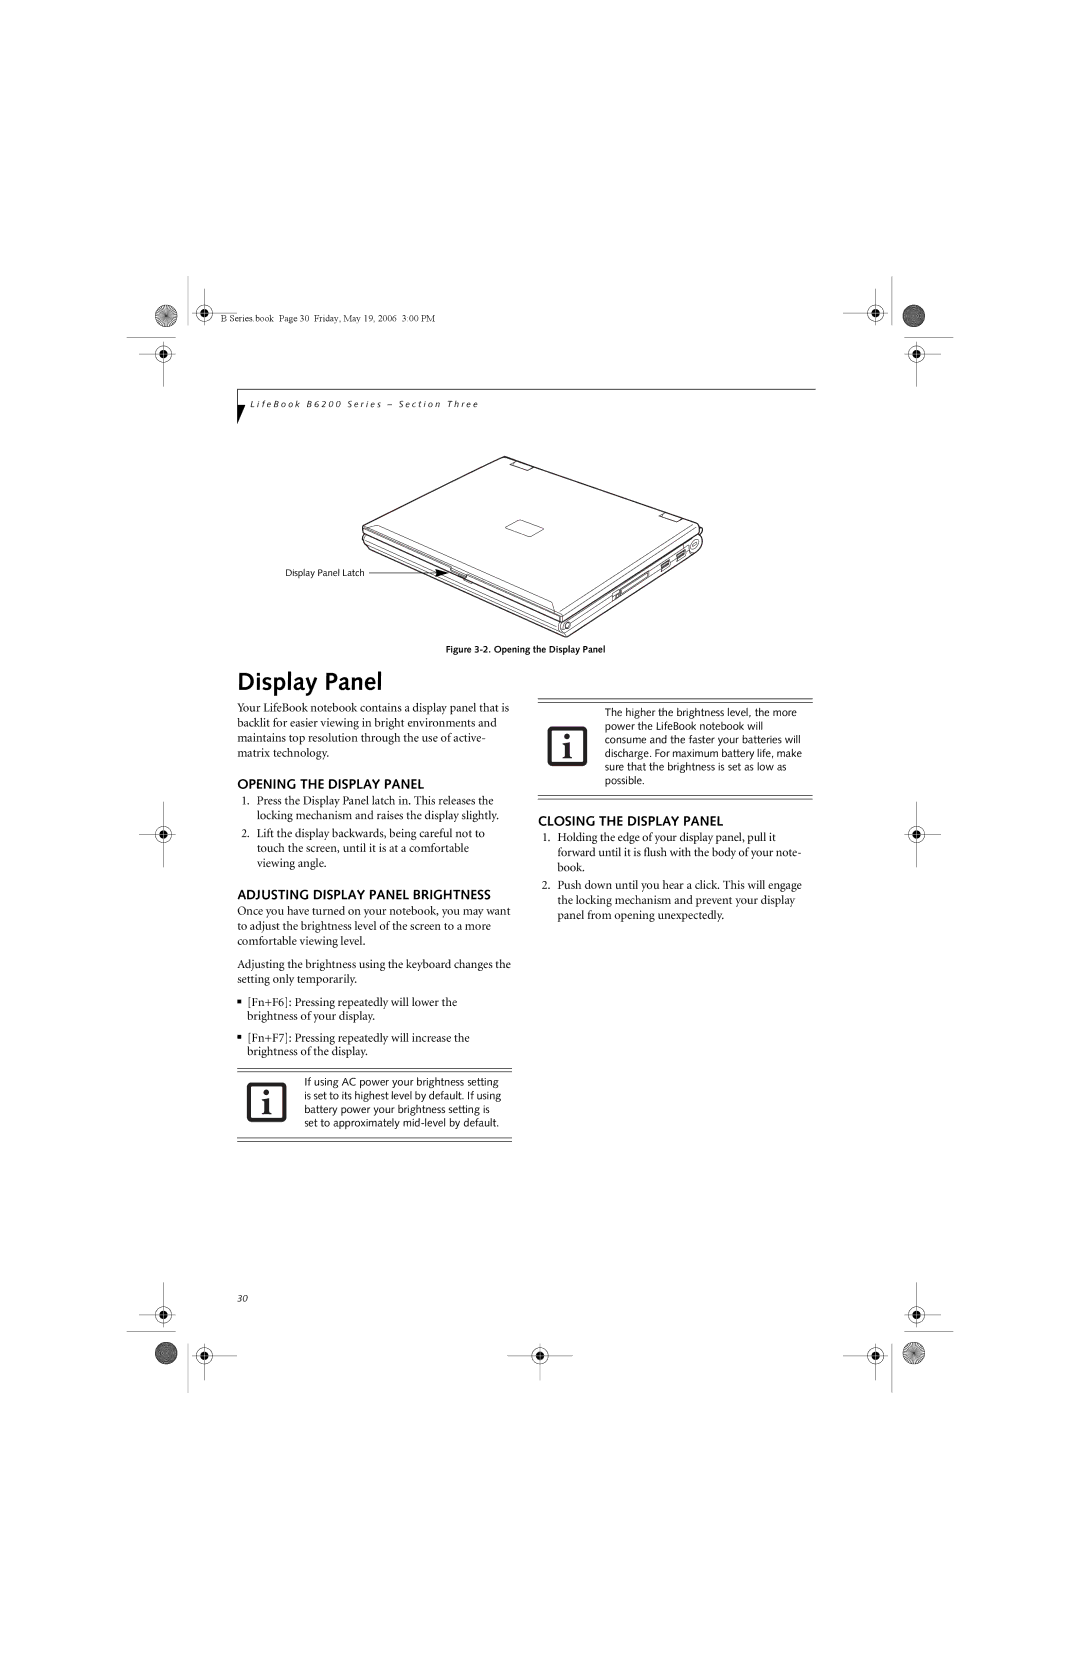 Fujitsu Siemens Computers B6210 manual Opening the Display Panel, Adjusting Display Panel Brightness 